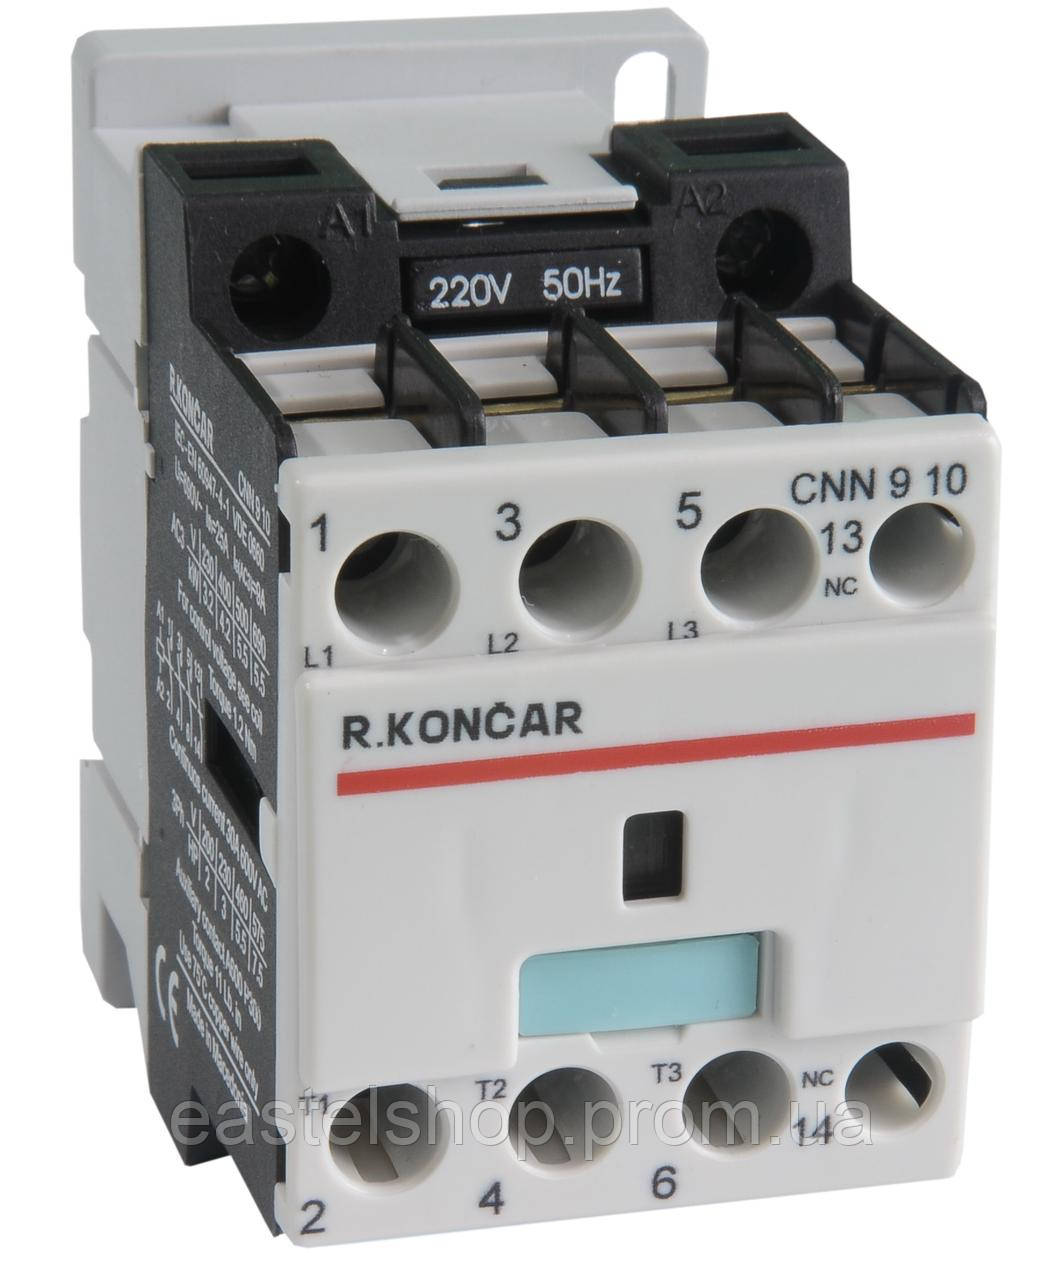 Контактор Rade Koncar CNM 12 11 220 V 50 Hz